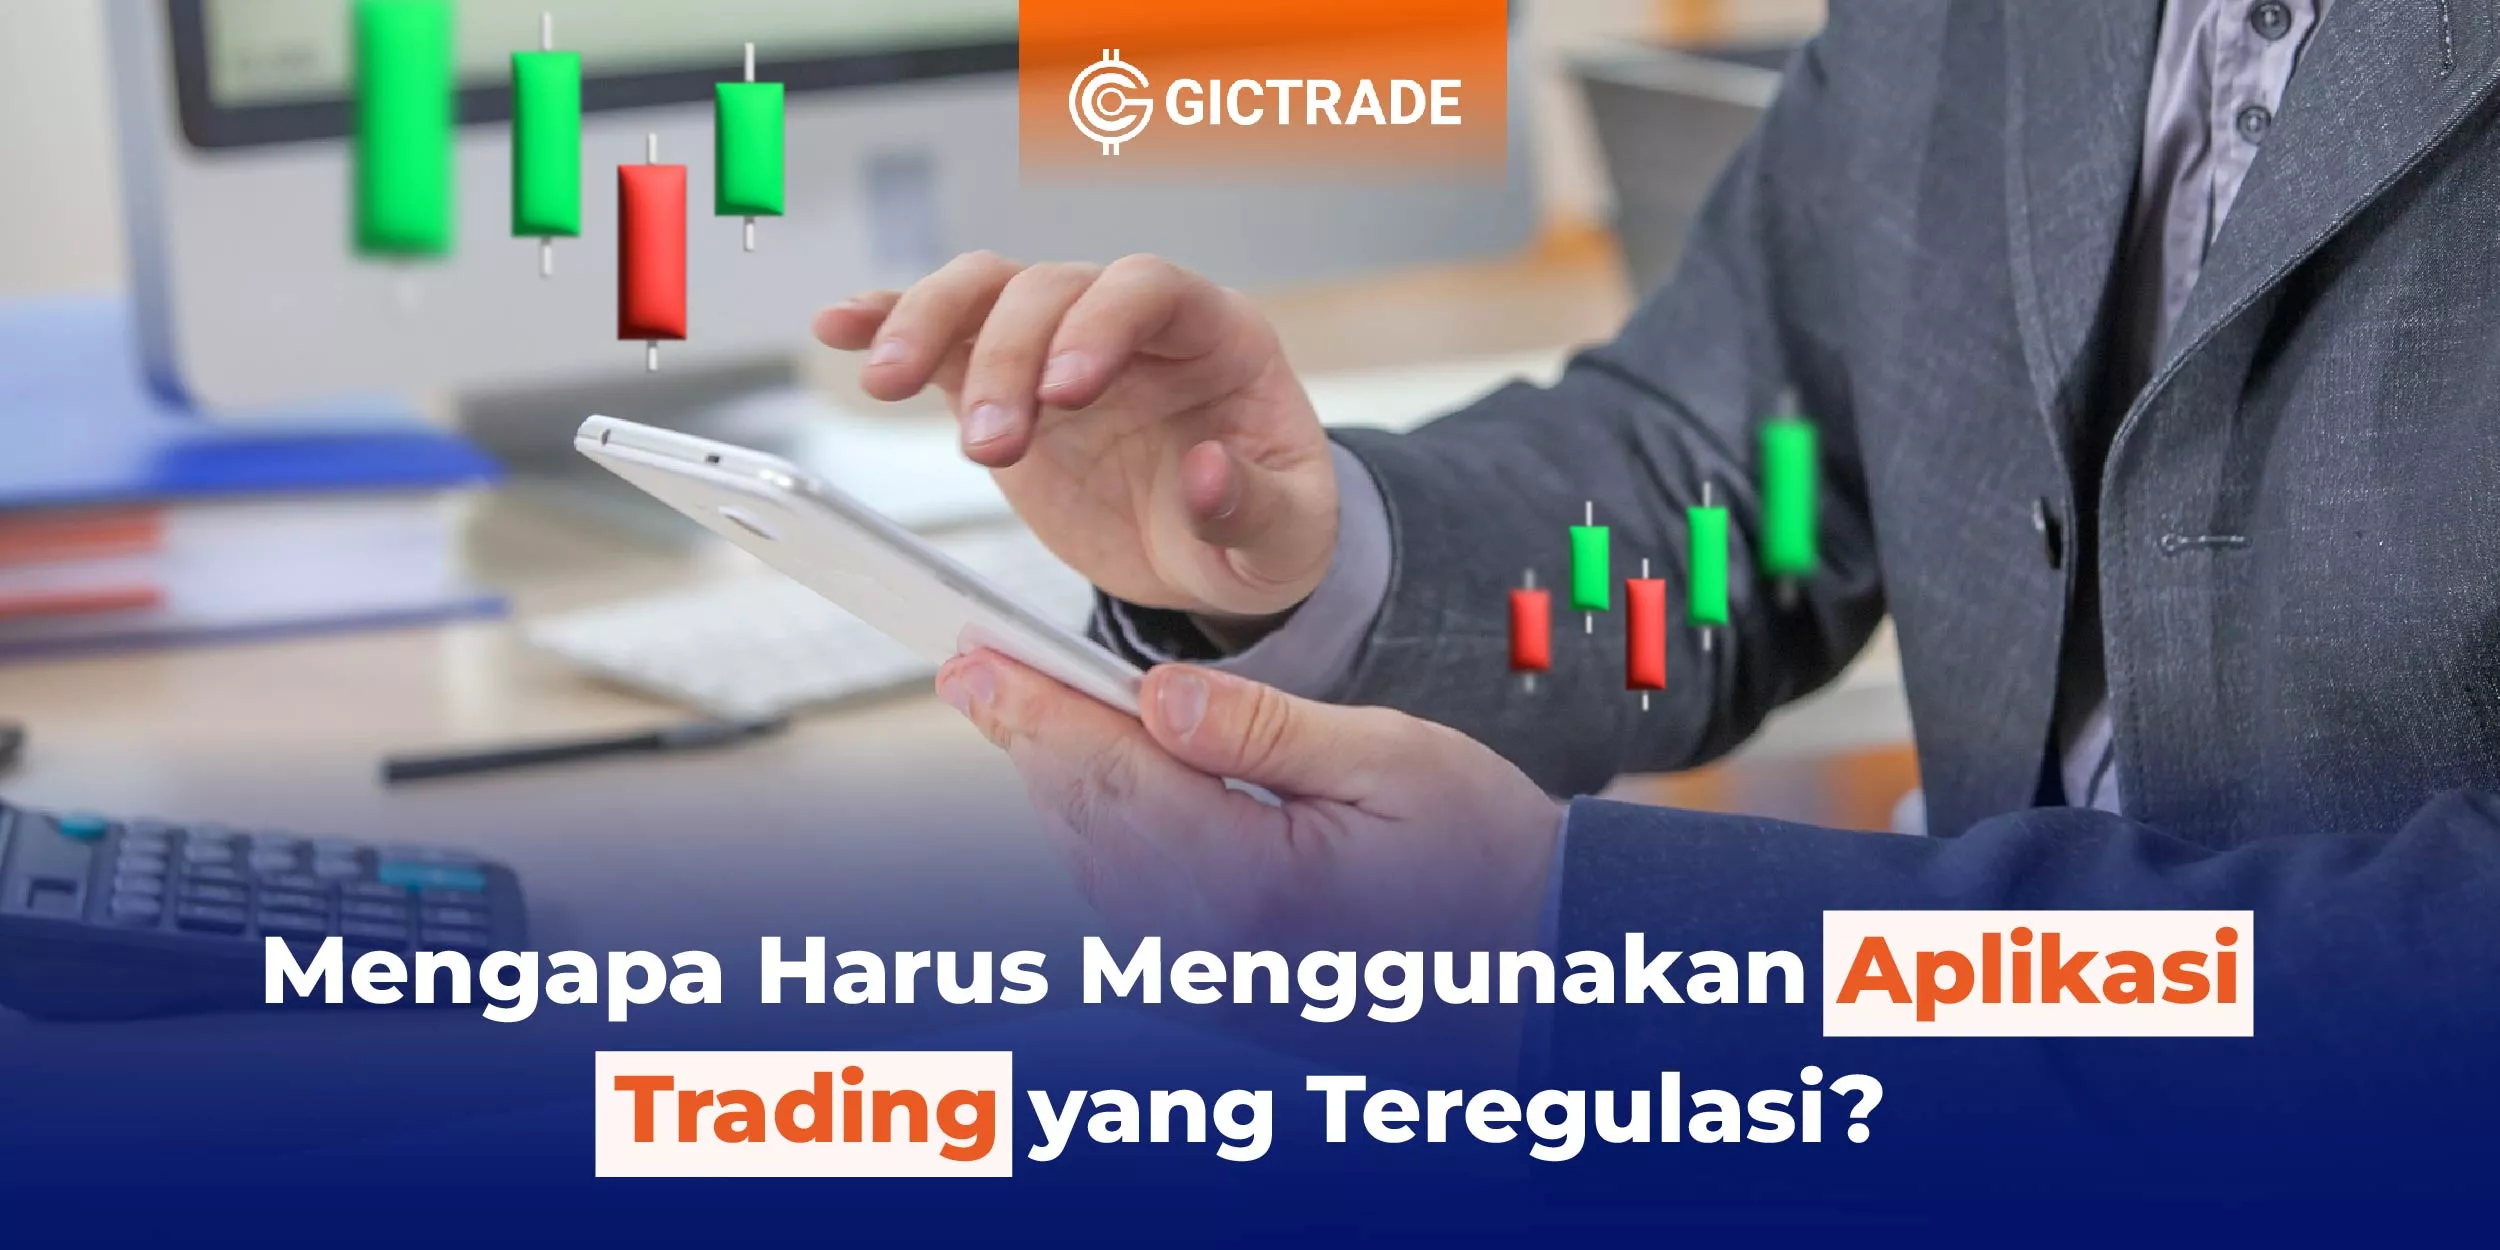 Aplikasi Trading Teregulasi